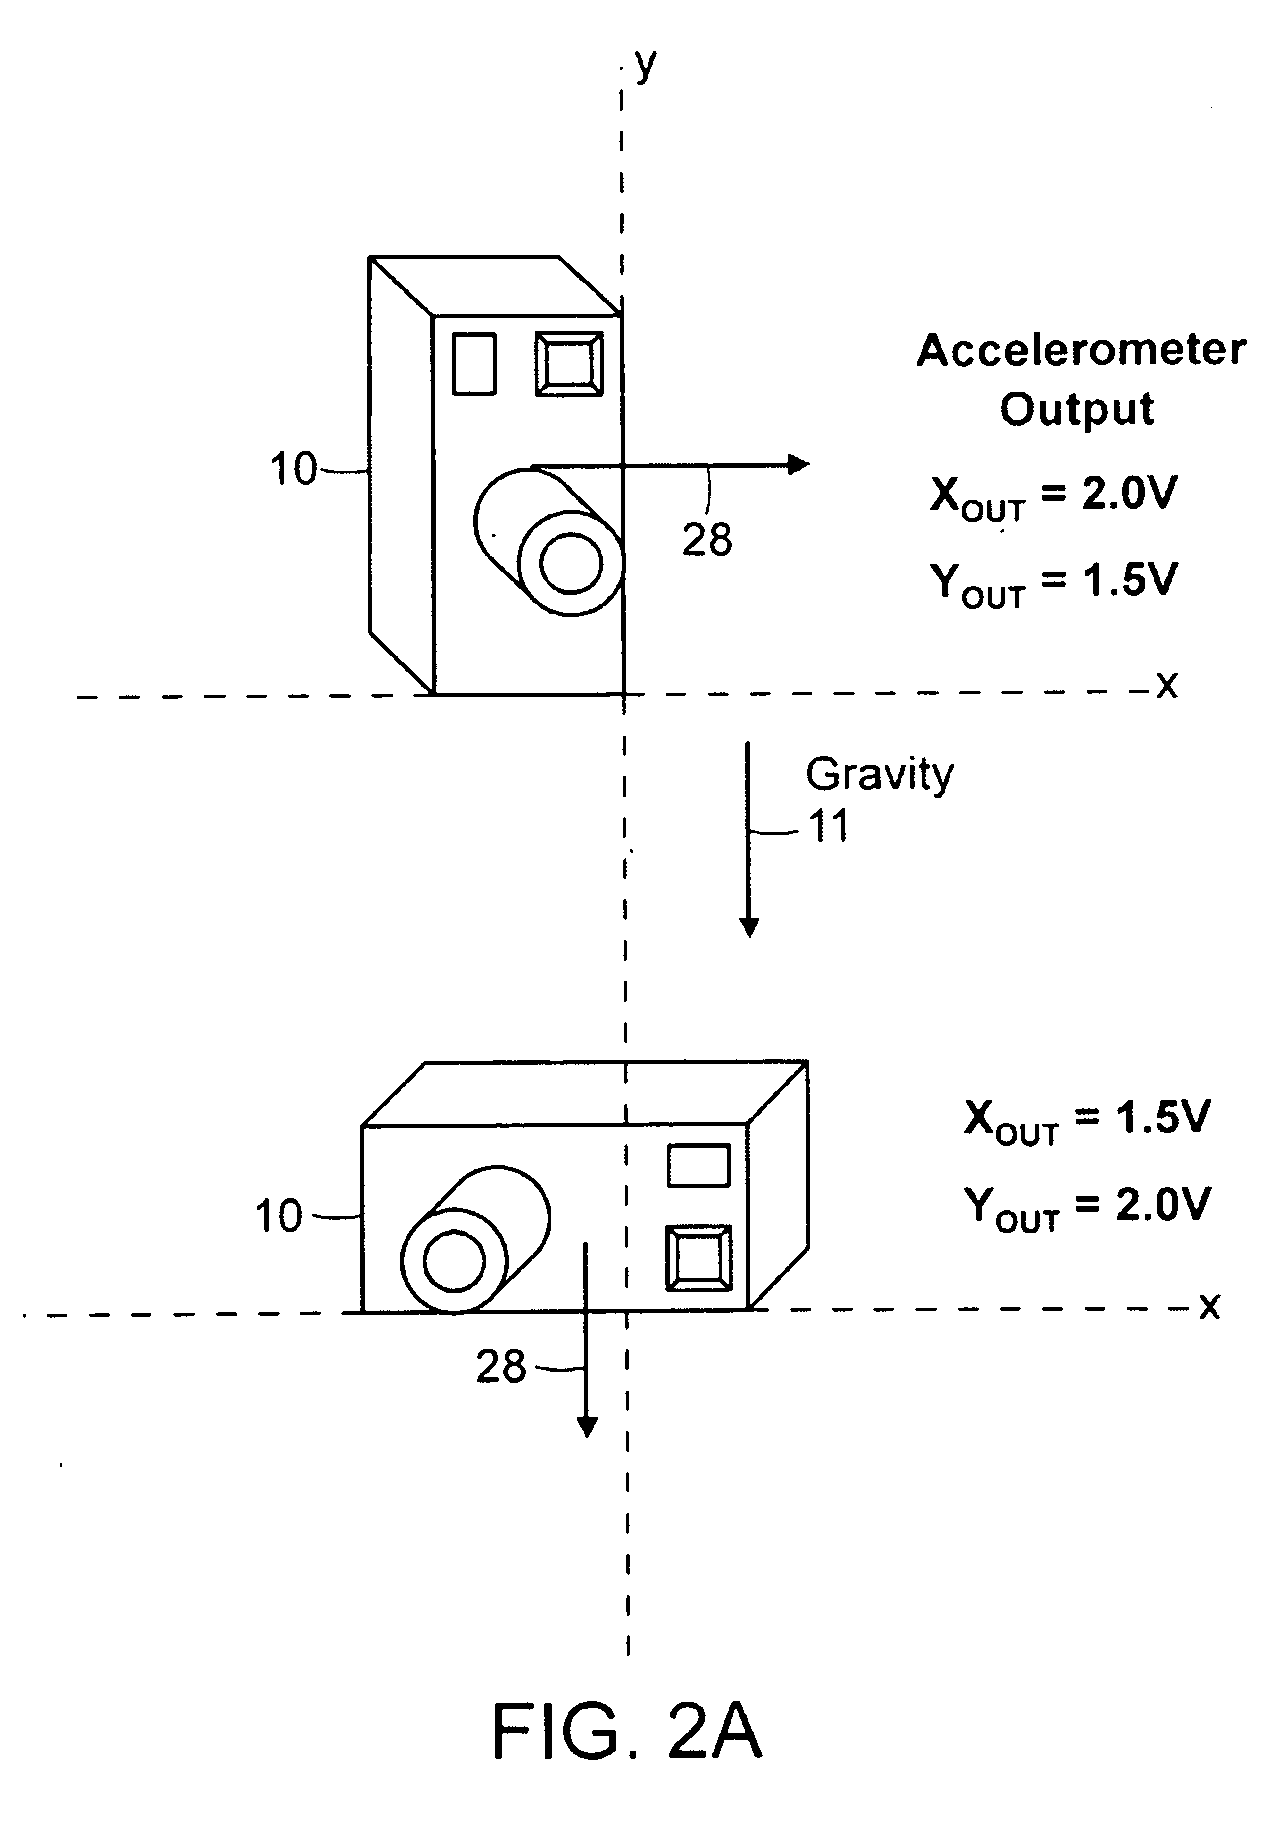 Camera with Acceleration Sensor